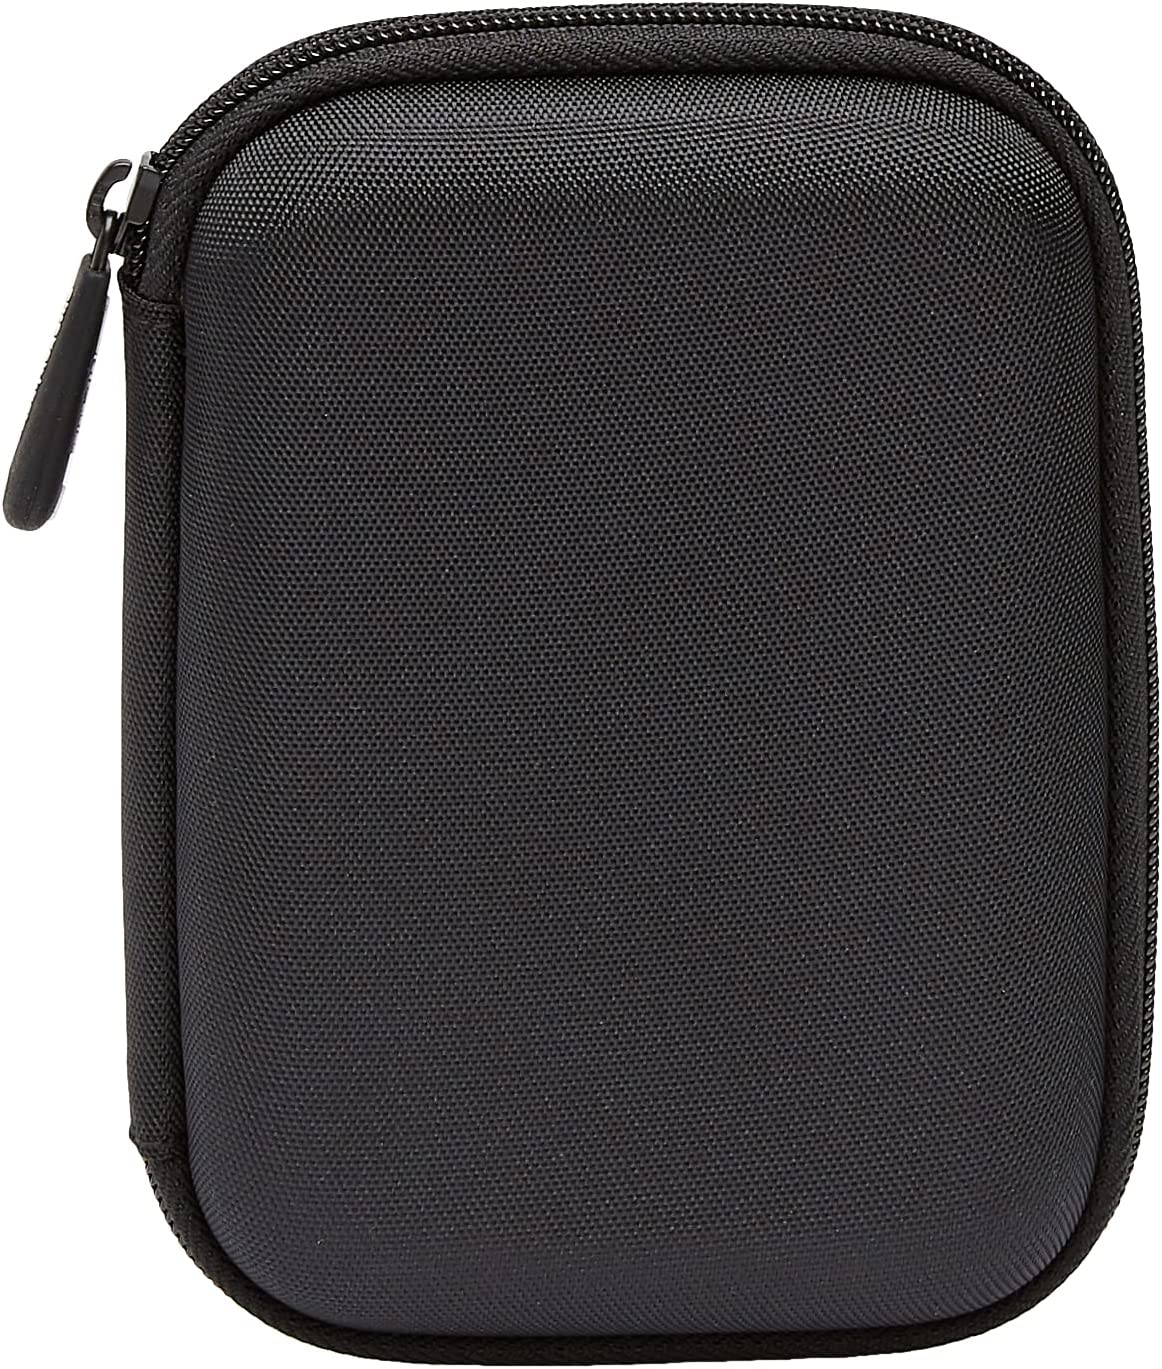 Basics External Hard Drive Portable Carrying Case